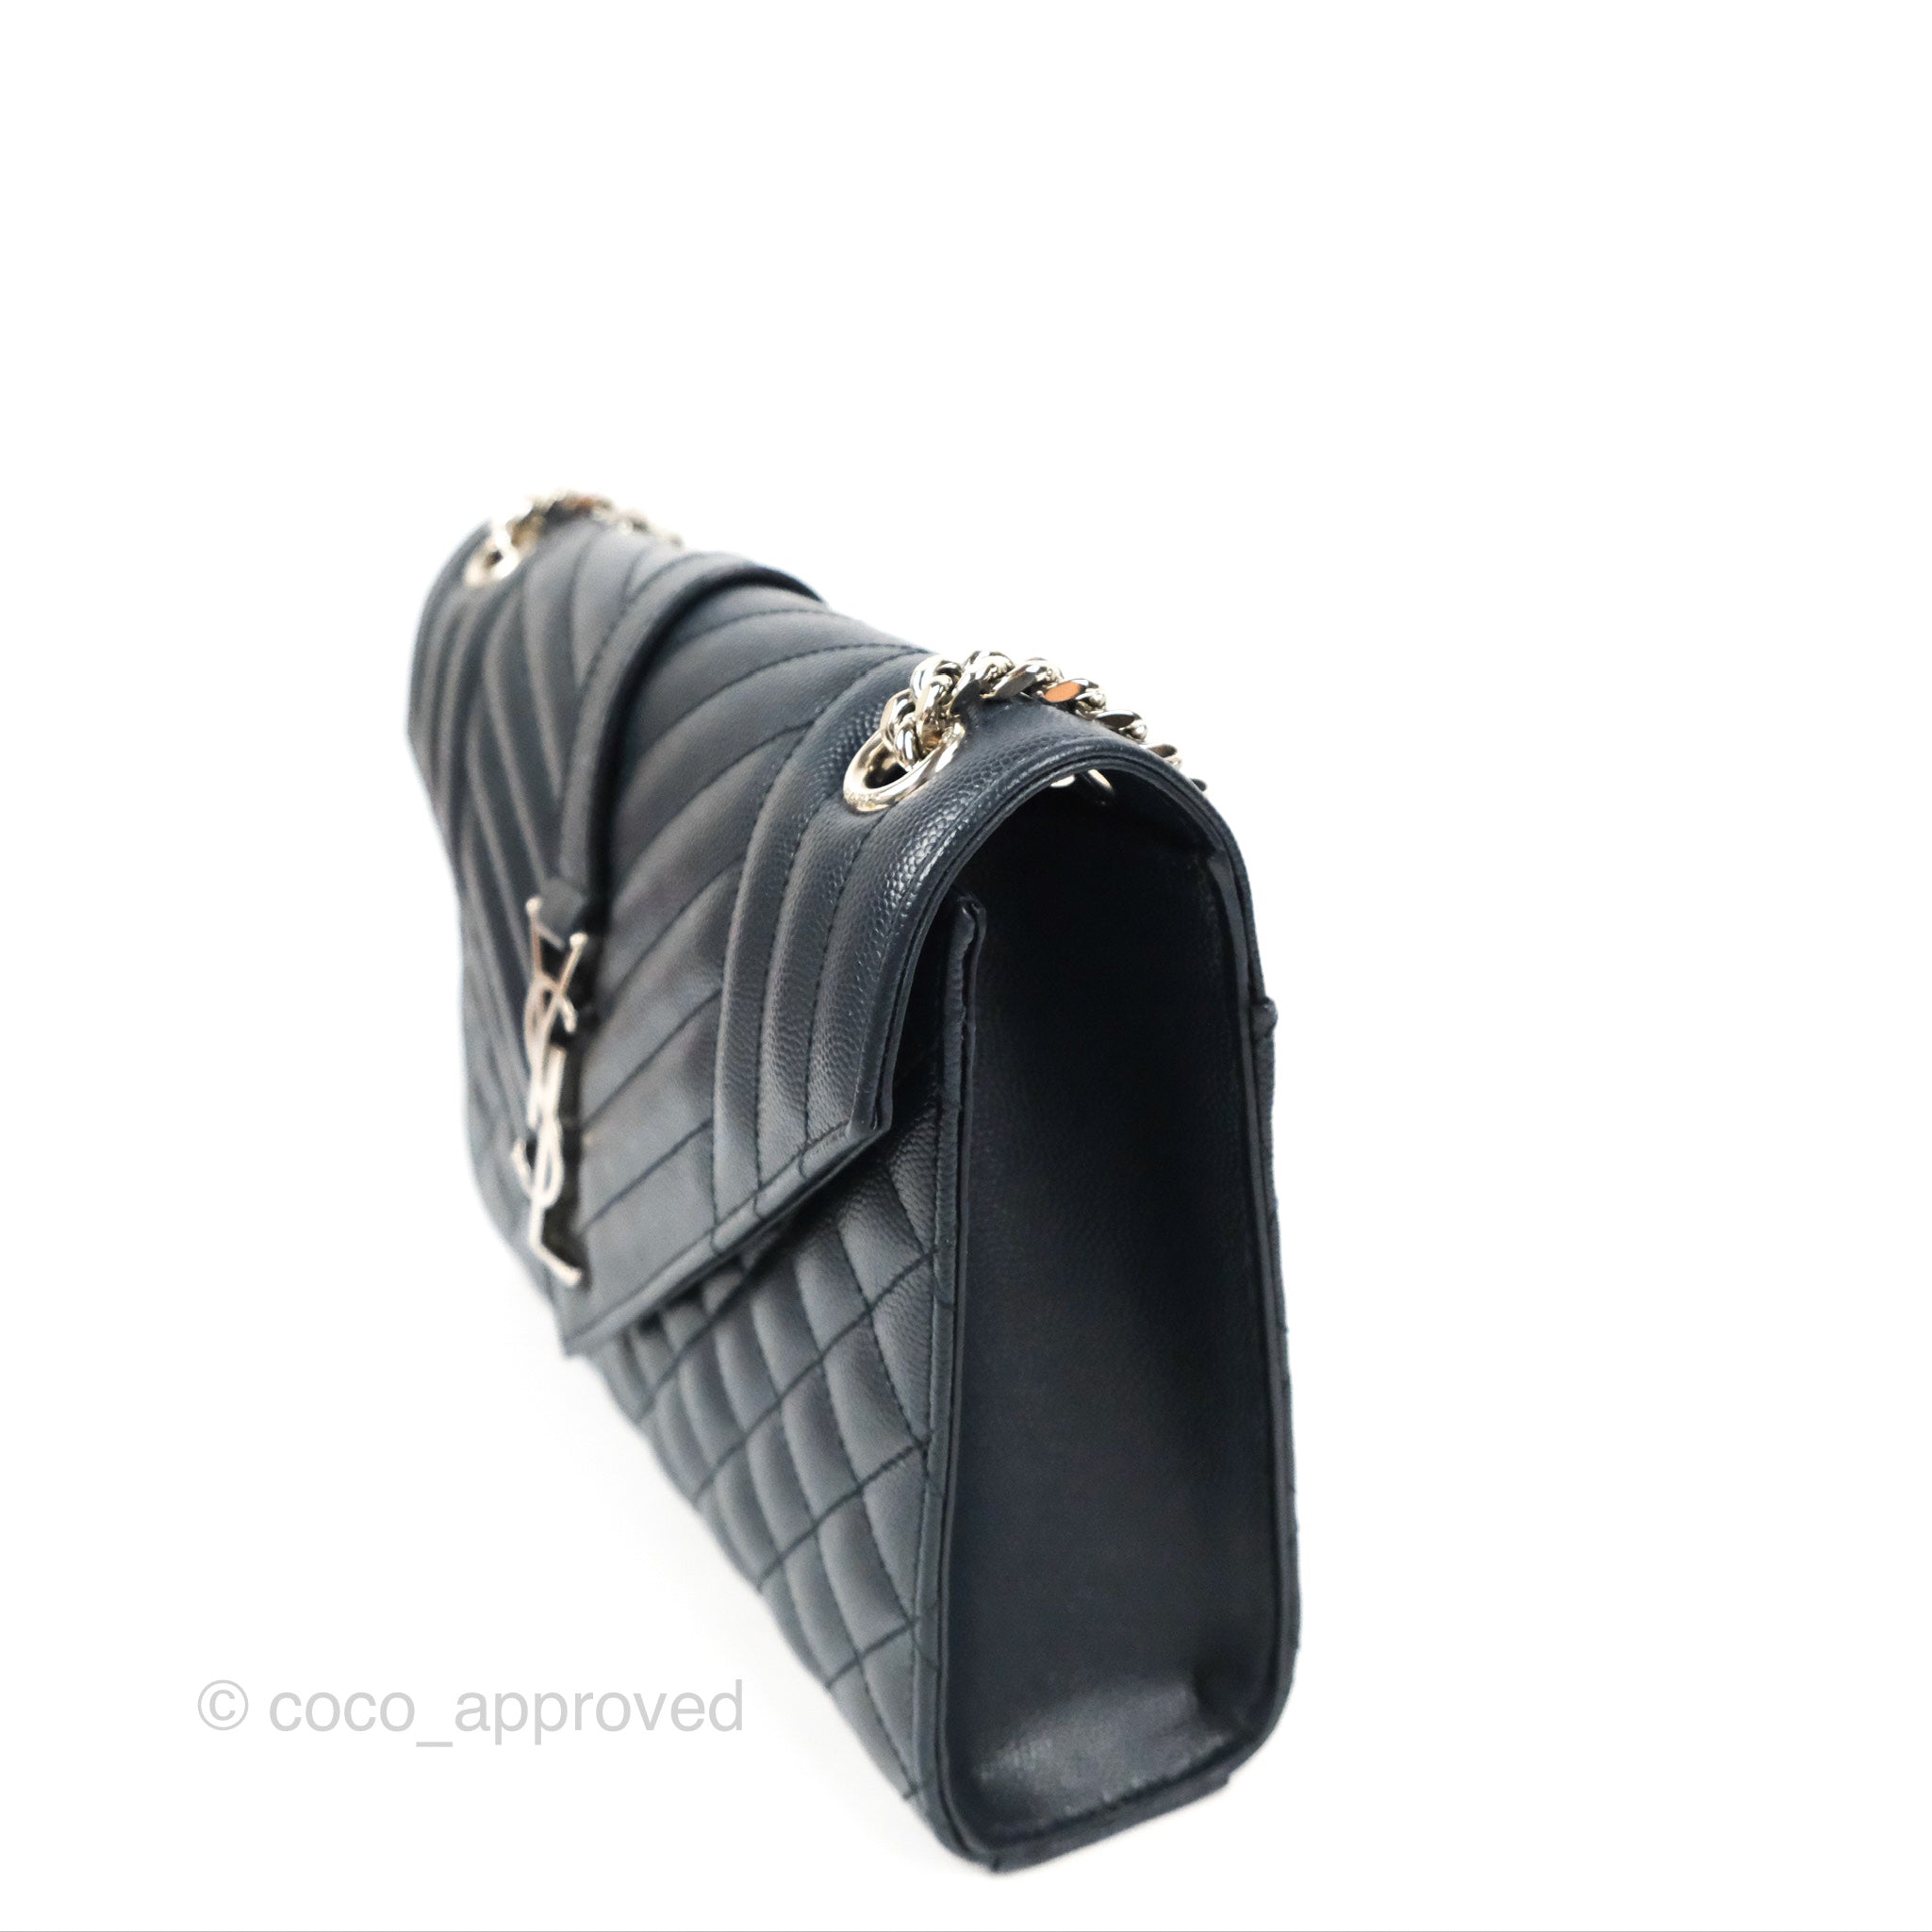 YSL medium Envelope flap bag in black Caviar leather bag - this is